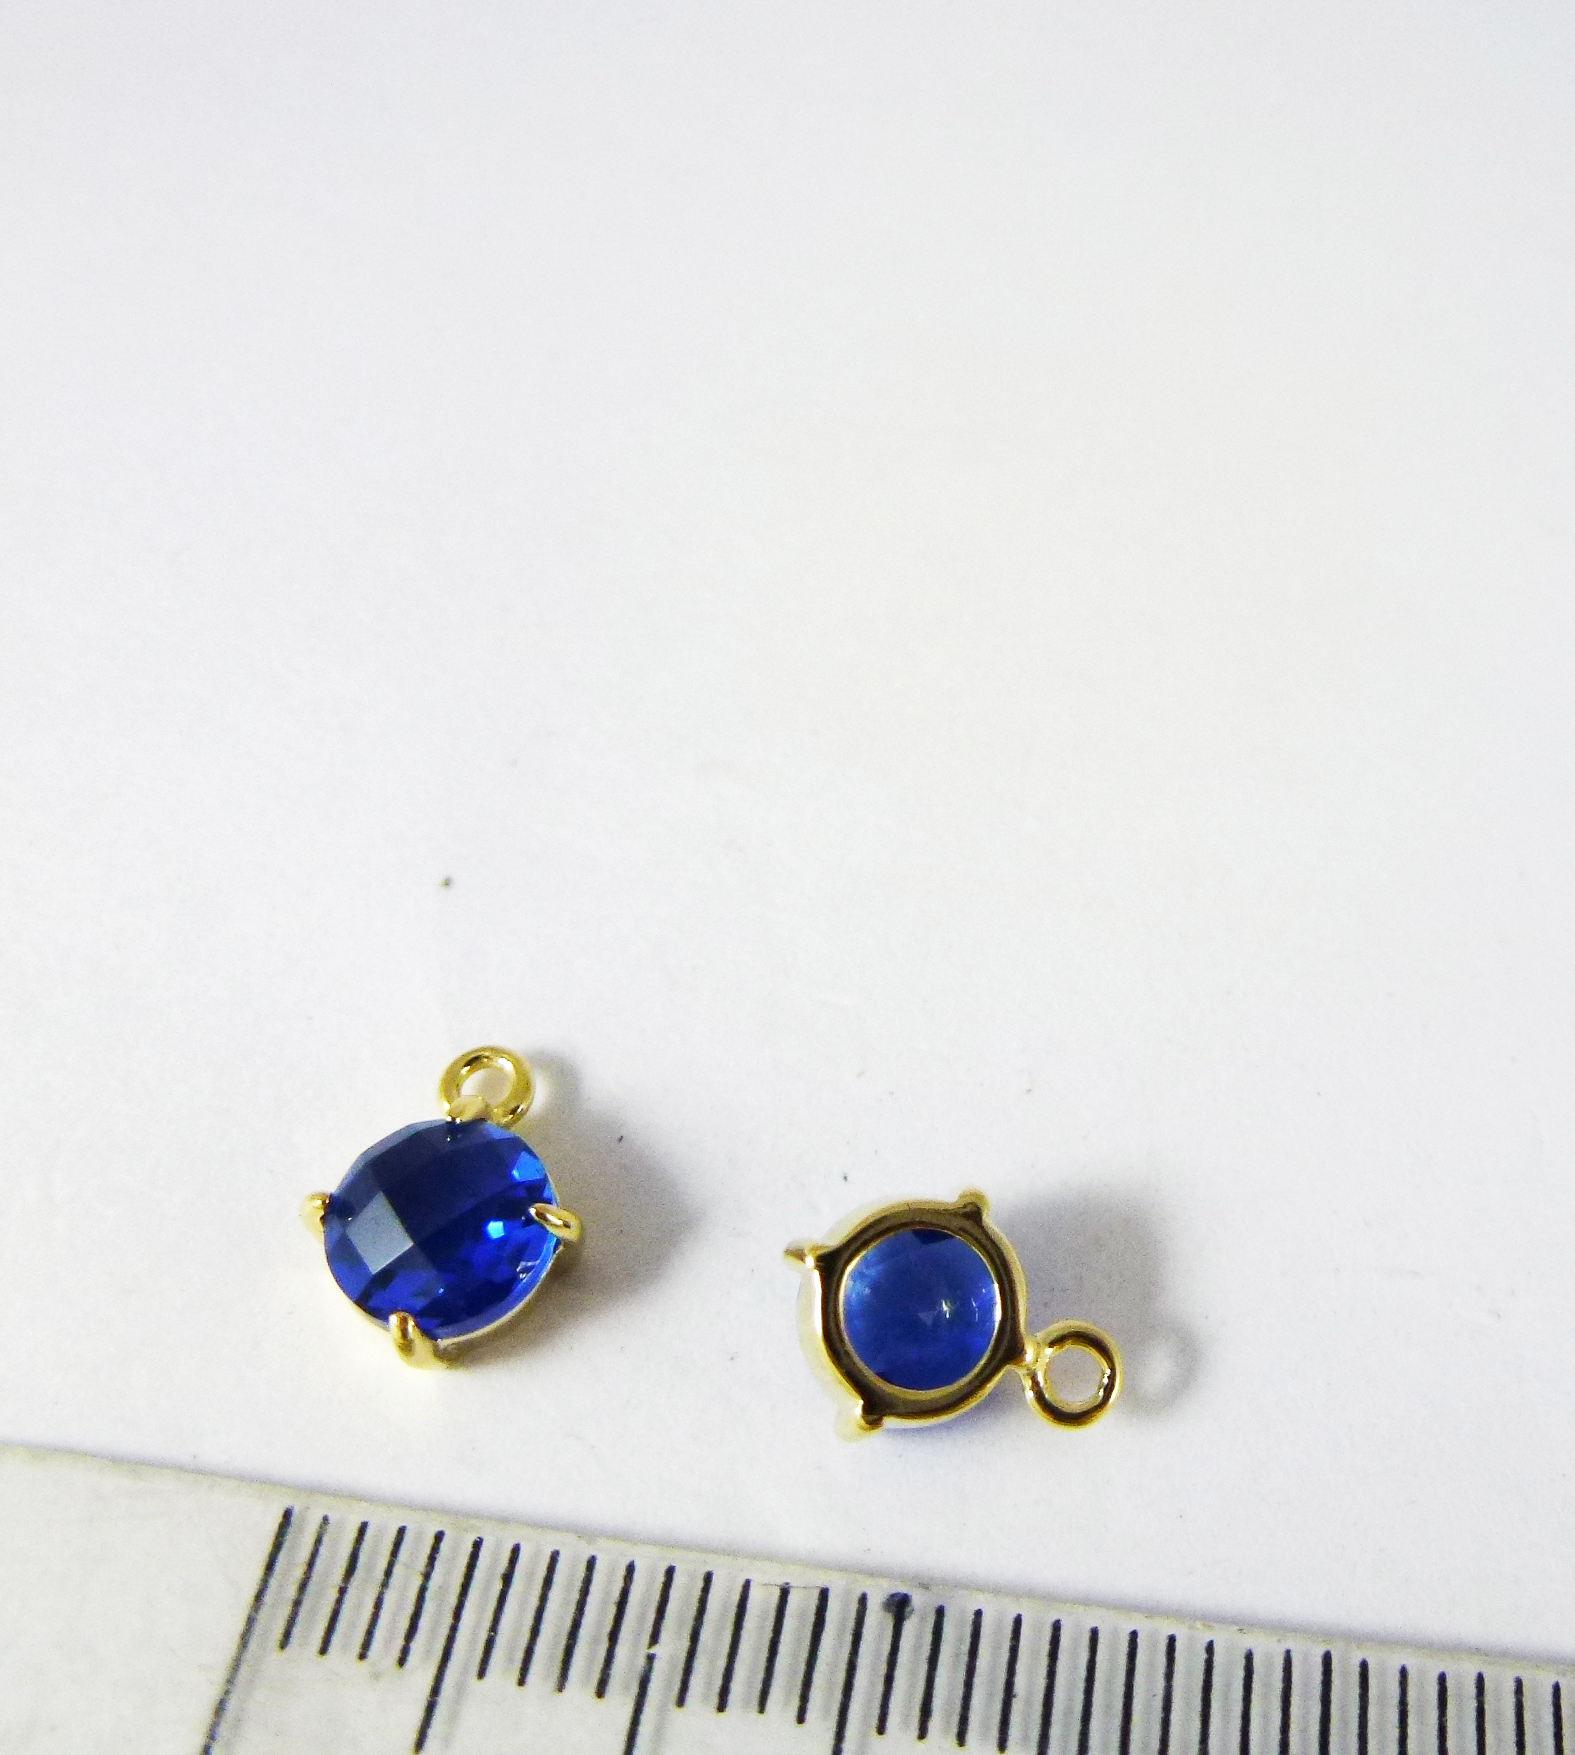 6mm銅鍍金色單孔四爪圓形誕生石-九月藍寶石